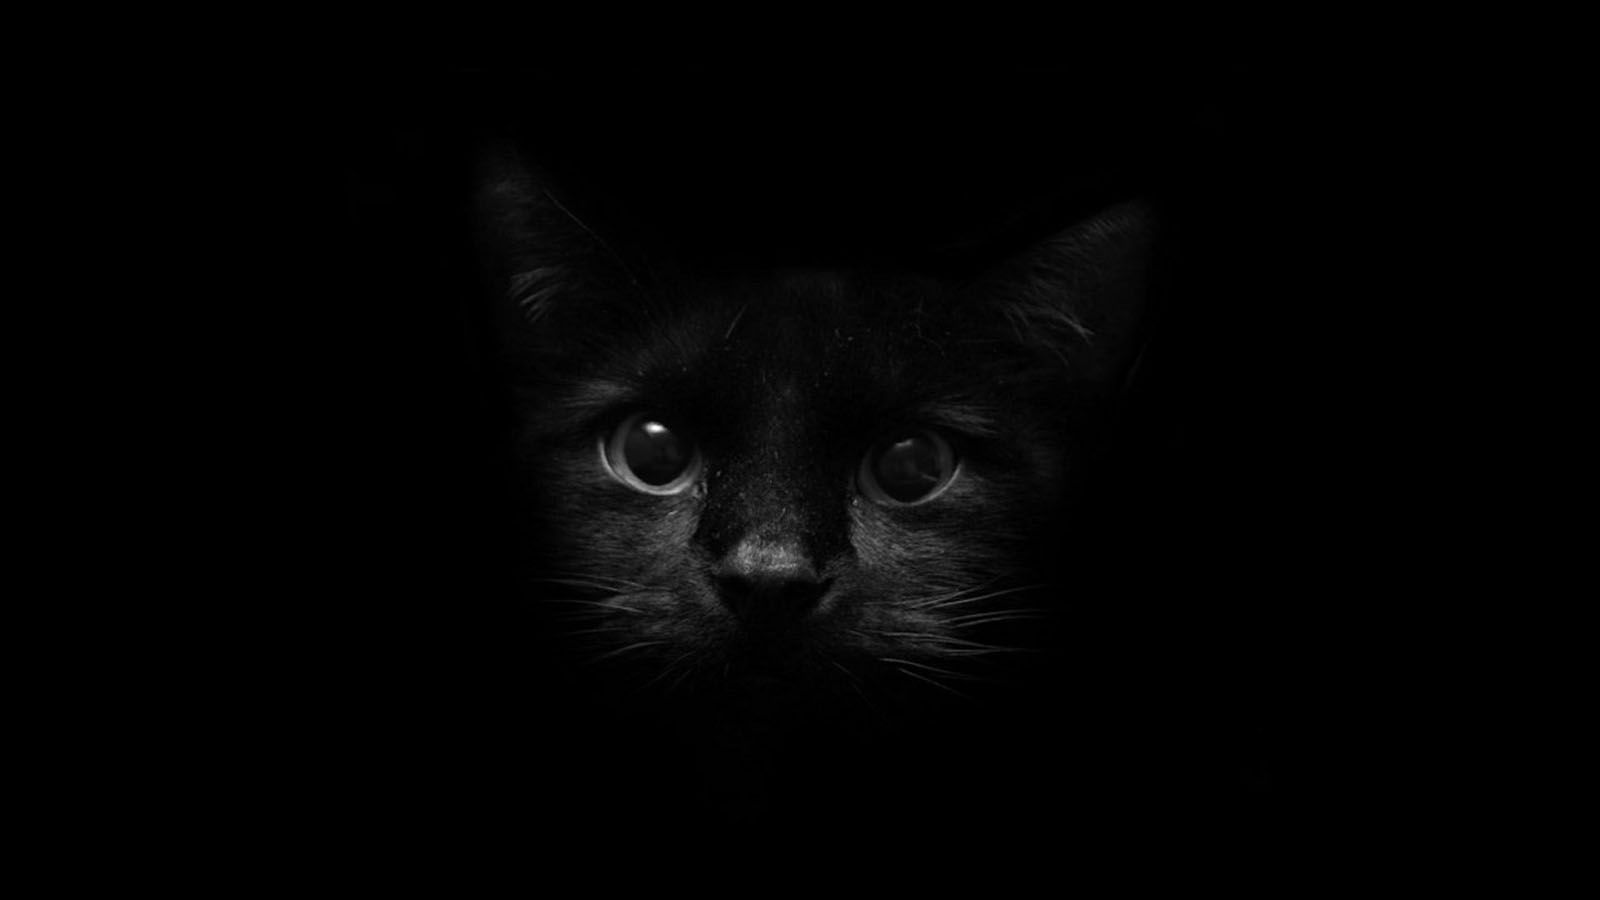 Black Wallpaper Widescreen Is 4K Wallpaper. Black cat image, Cat wallpaper, Cat background